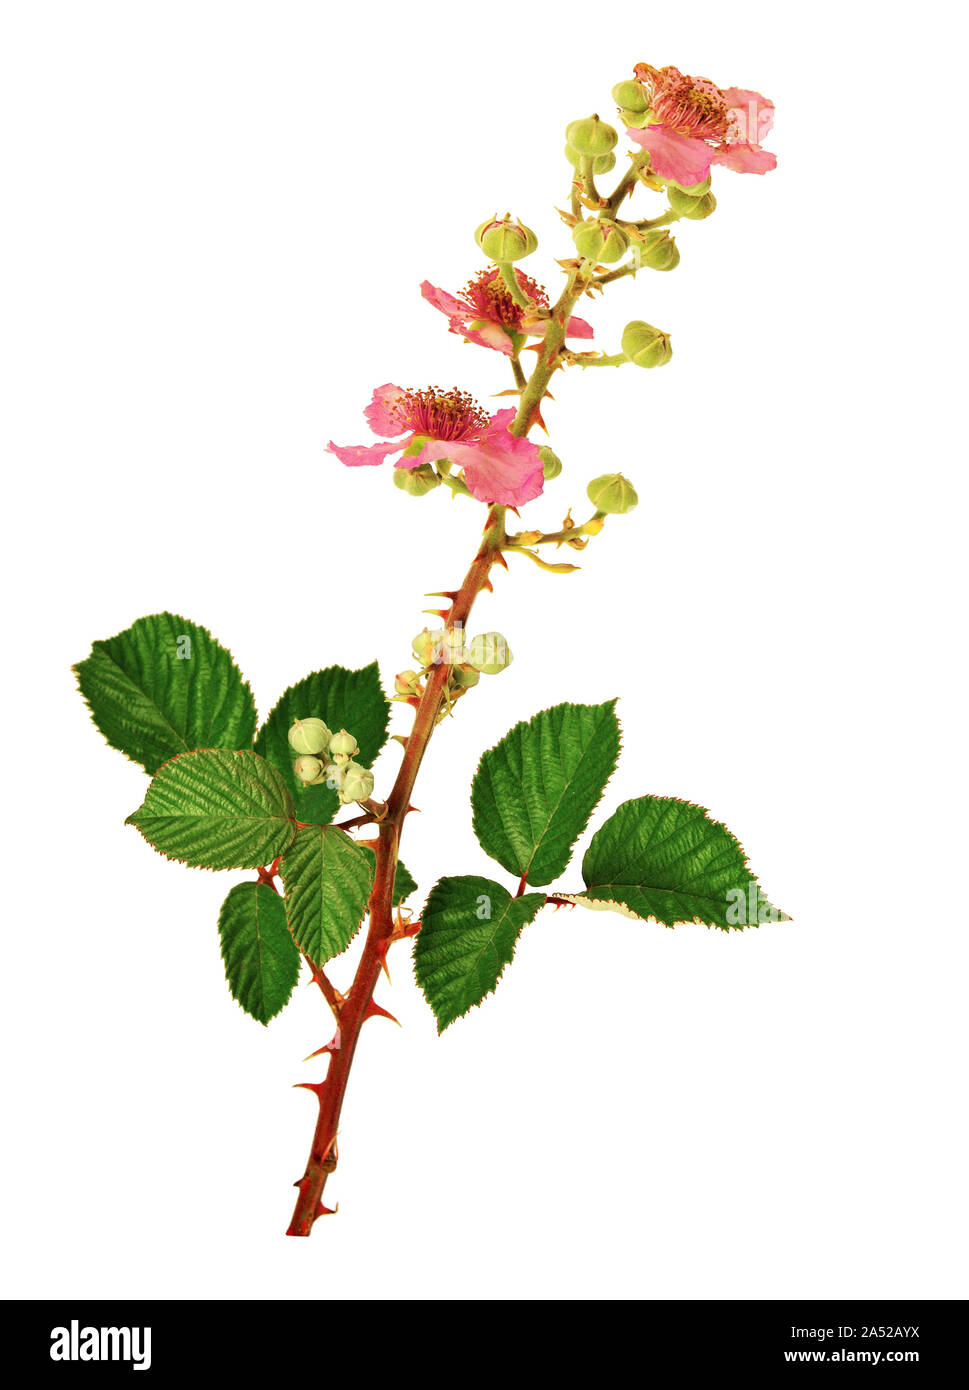 Flowering stem of bramble isolated on white background. Stock Photo